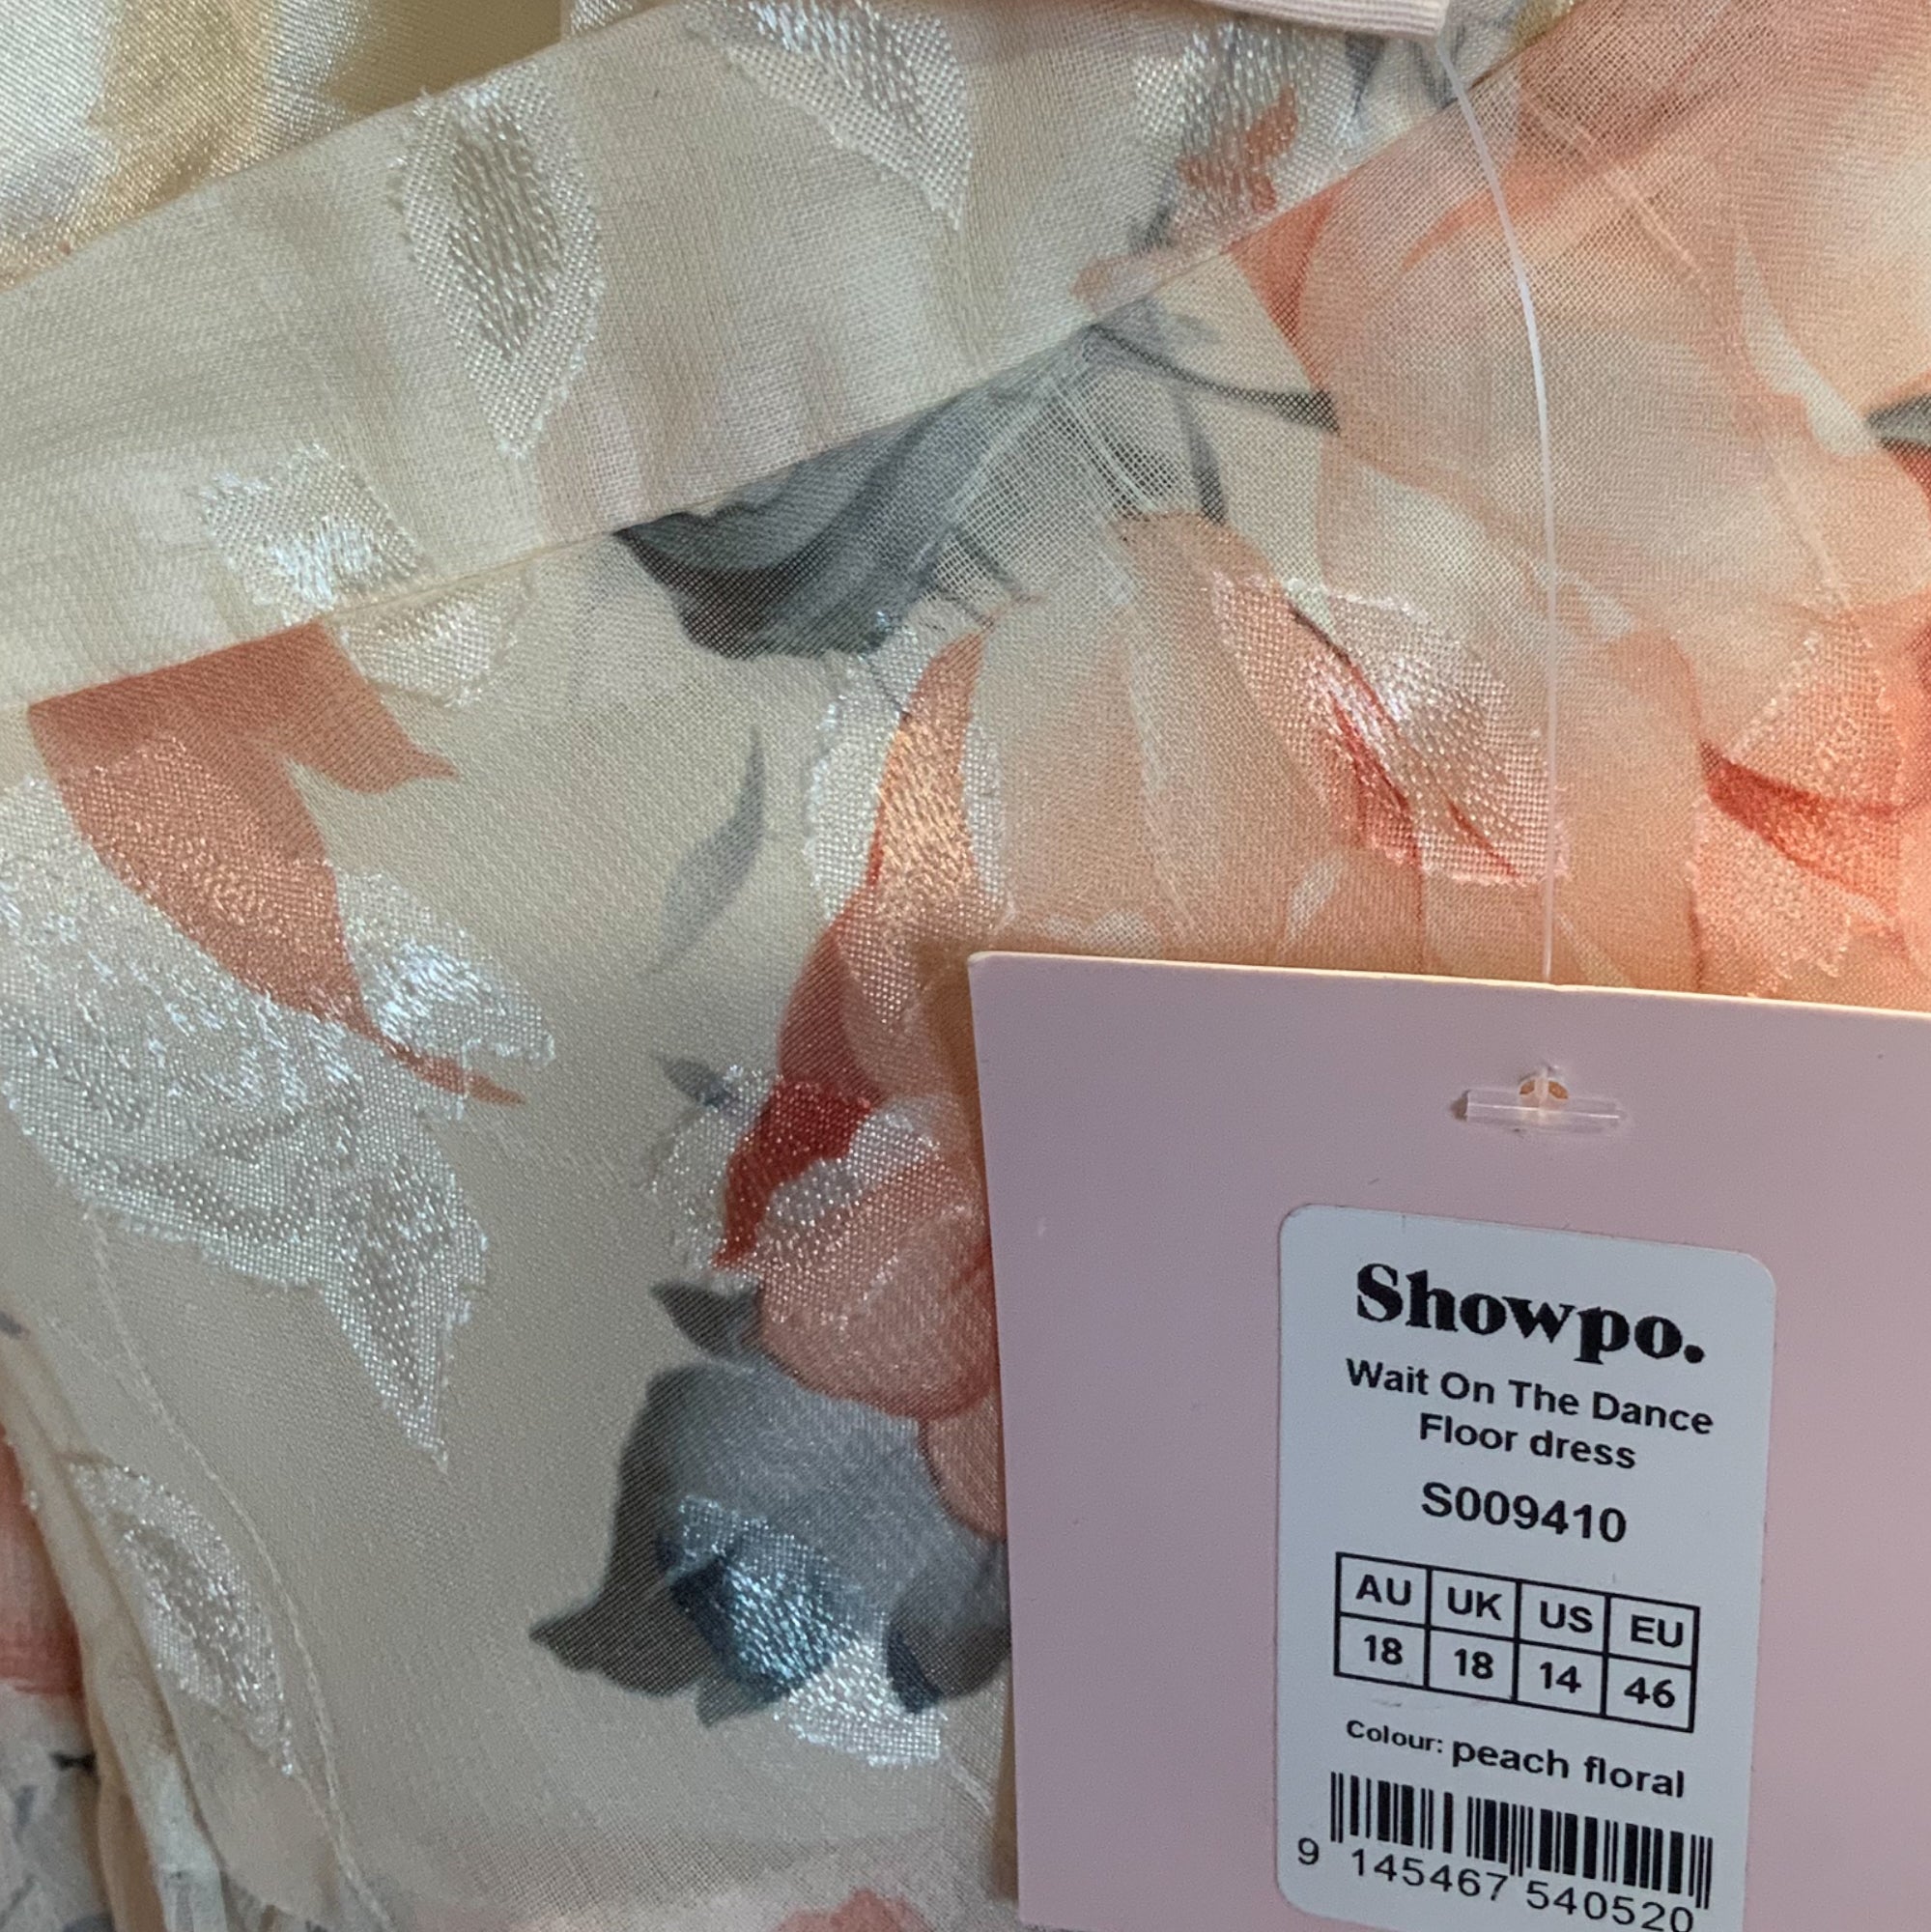 BNWT SHOWPO "Wait on The Dance Floor' Dress in Peach Floral - Size 16/18